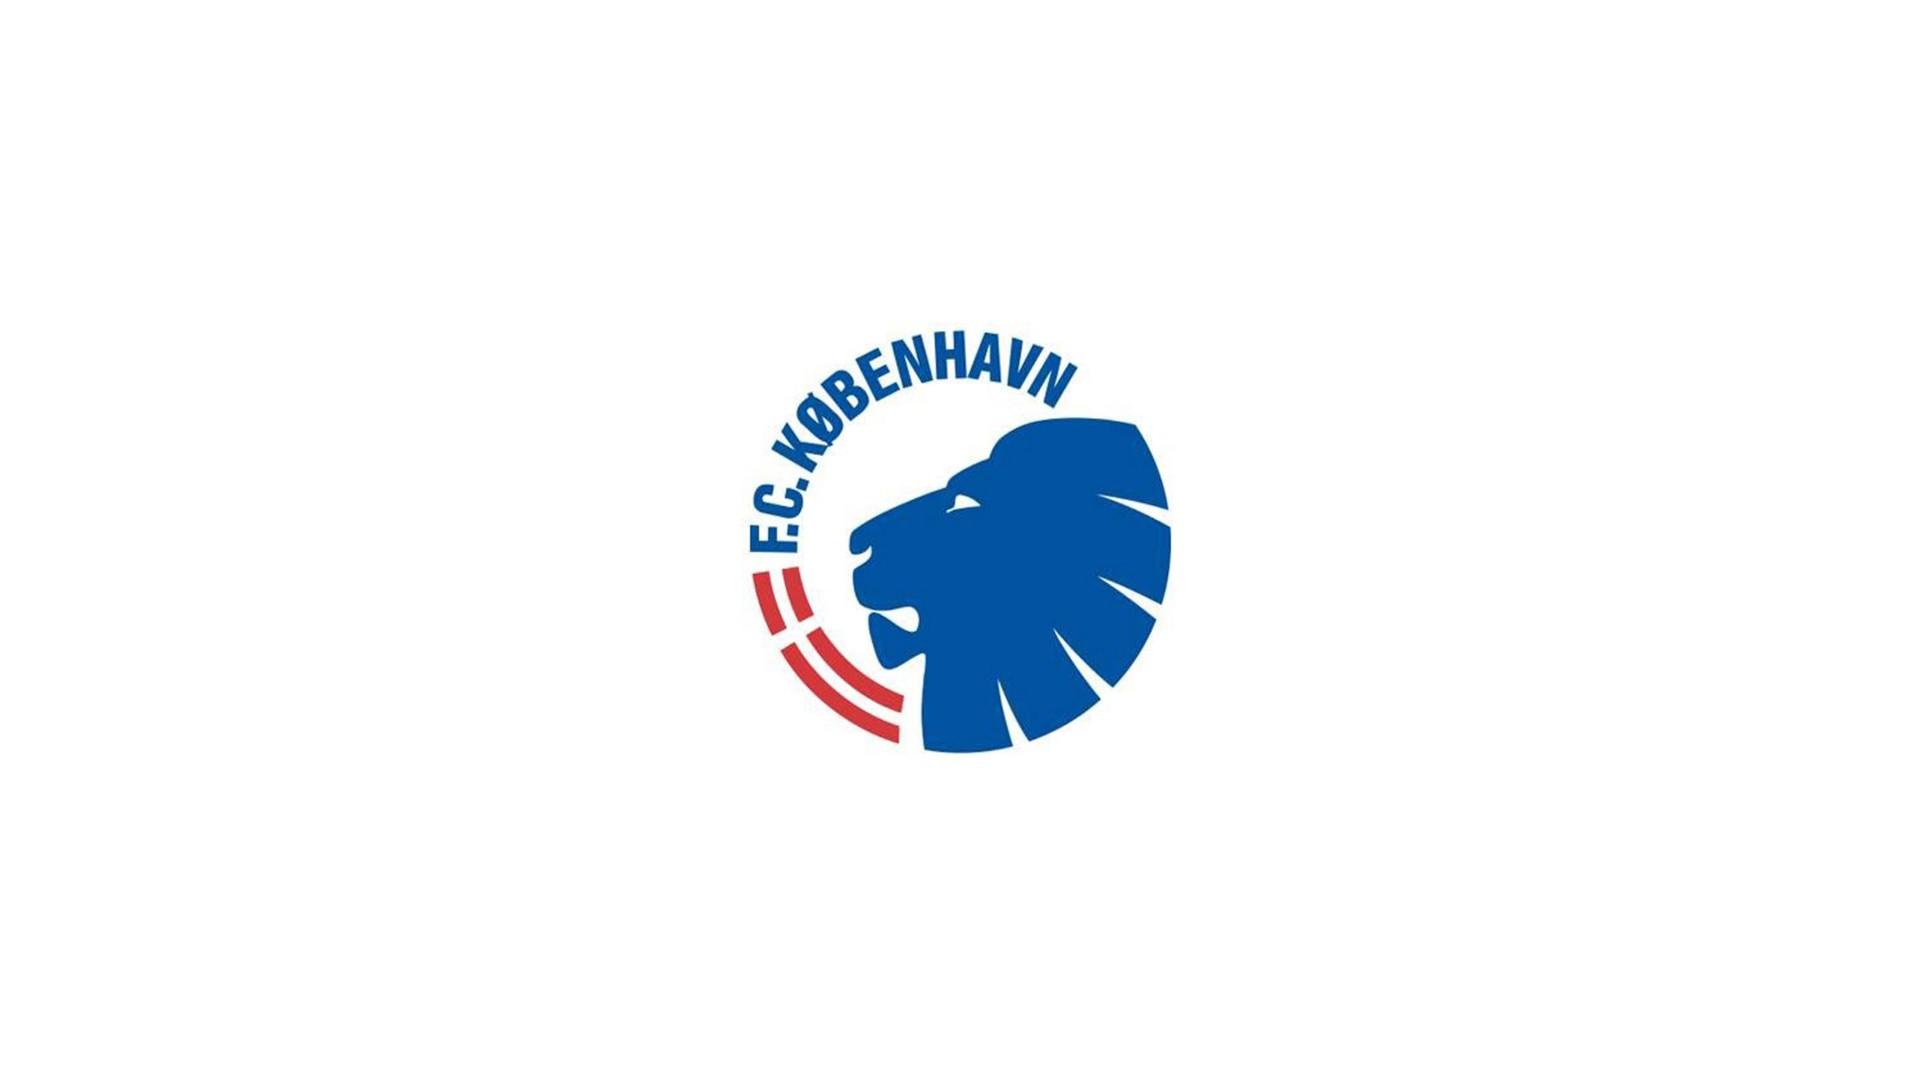 F.C. Copenhagen Express Interest in Esports